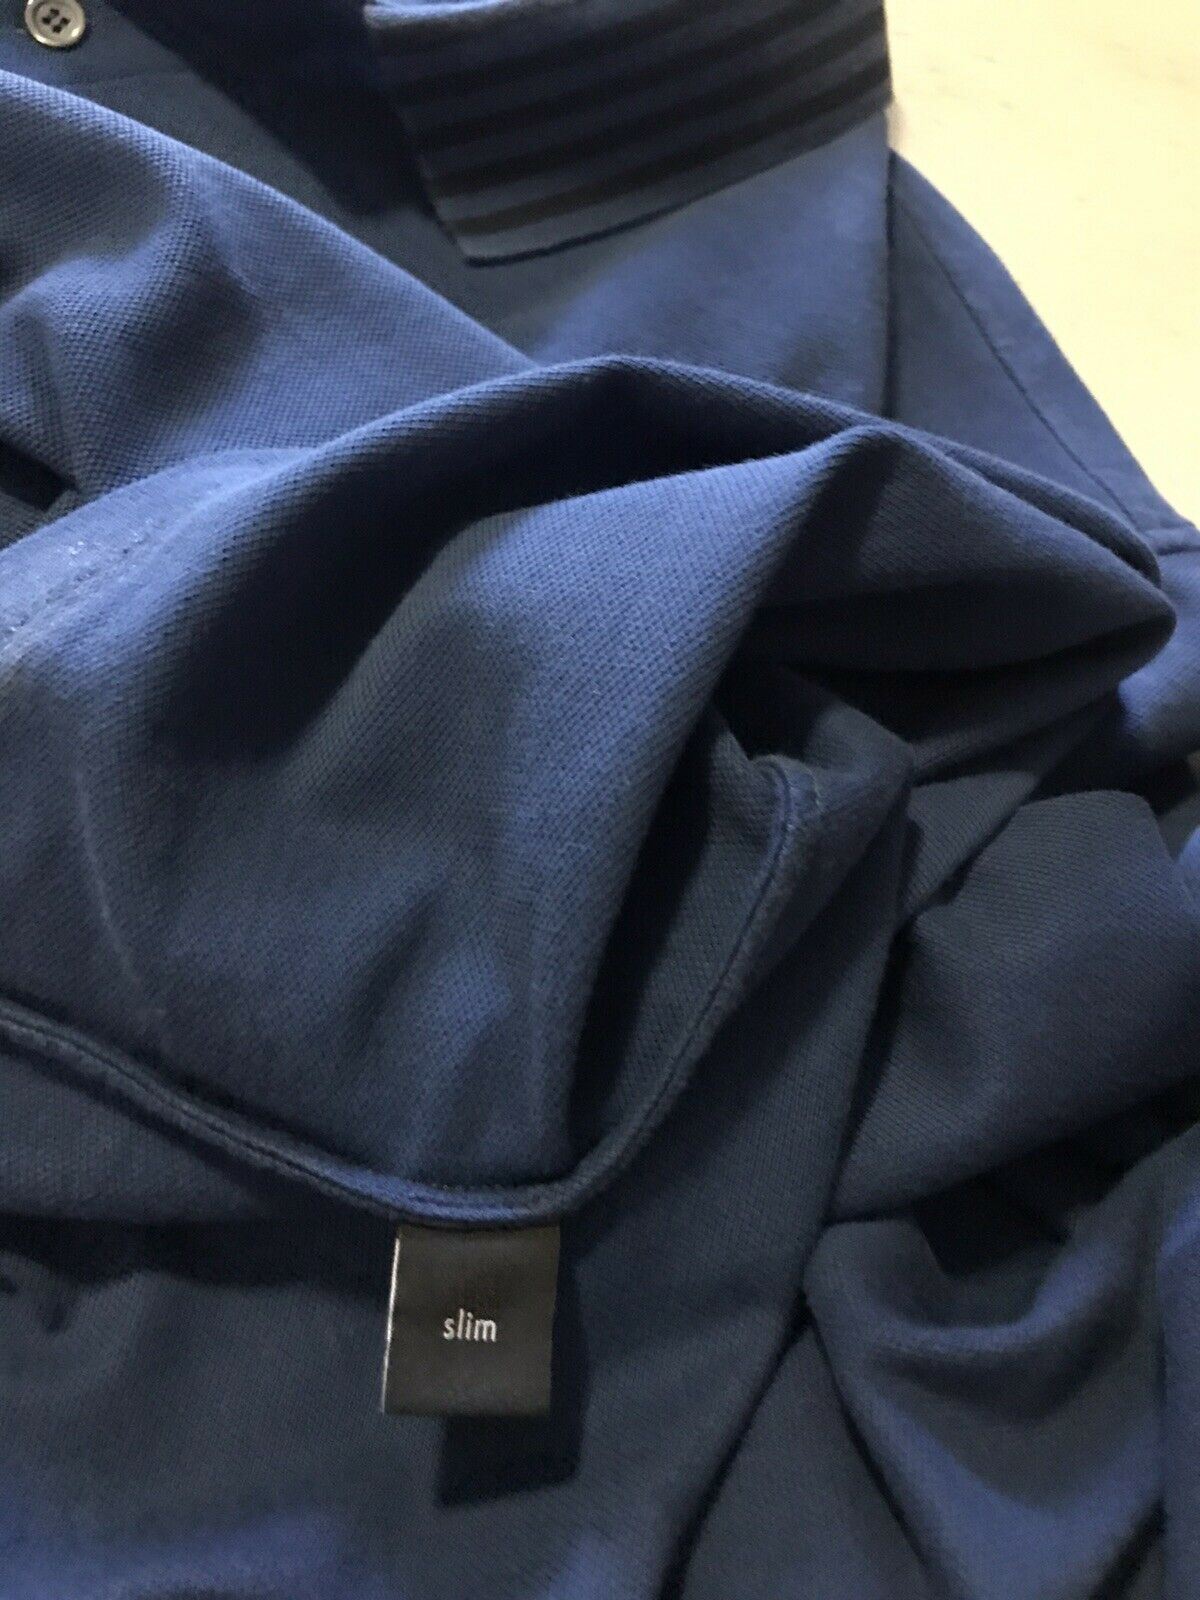 Мужская рубашка поло Gucci Slim Fit, синяя, размер XXXL, Италия, $645